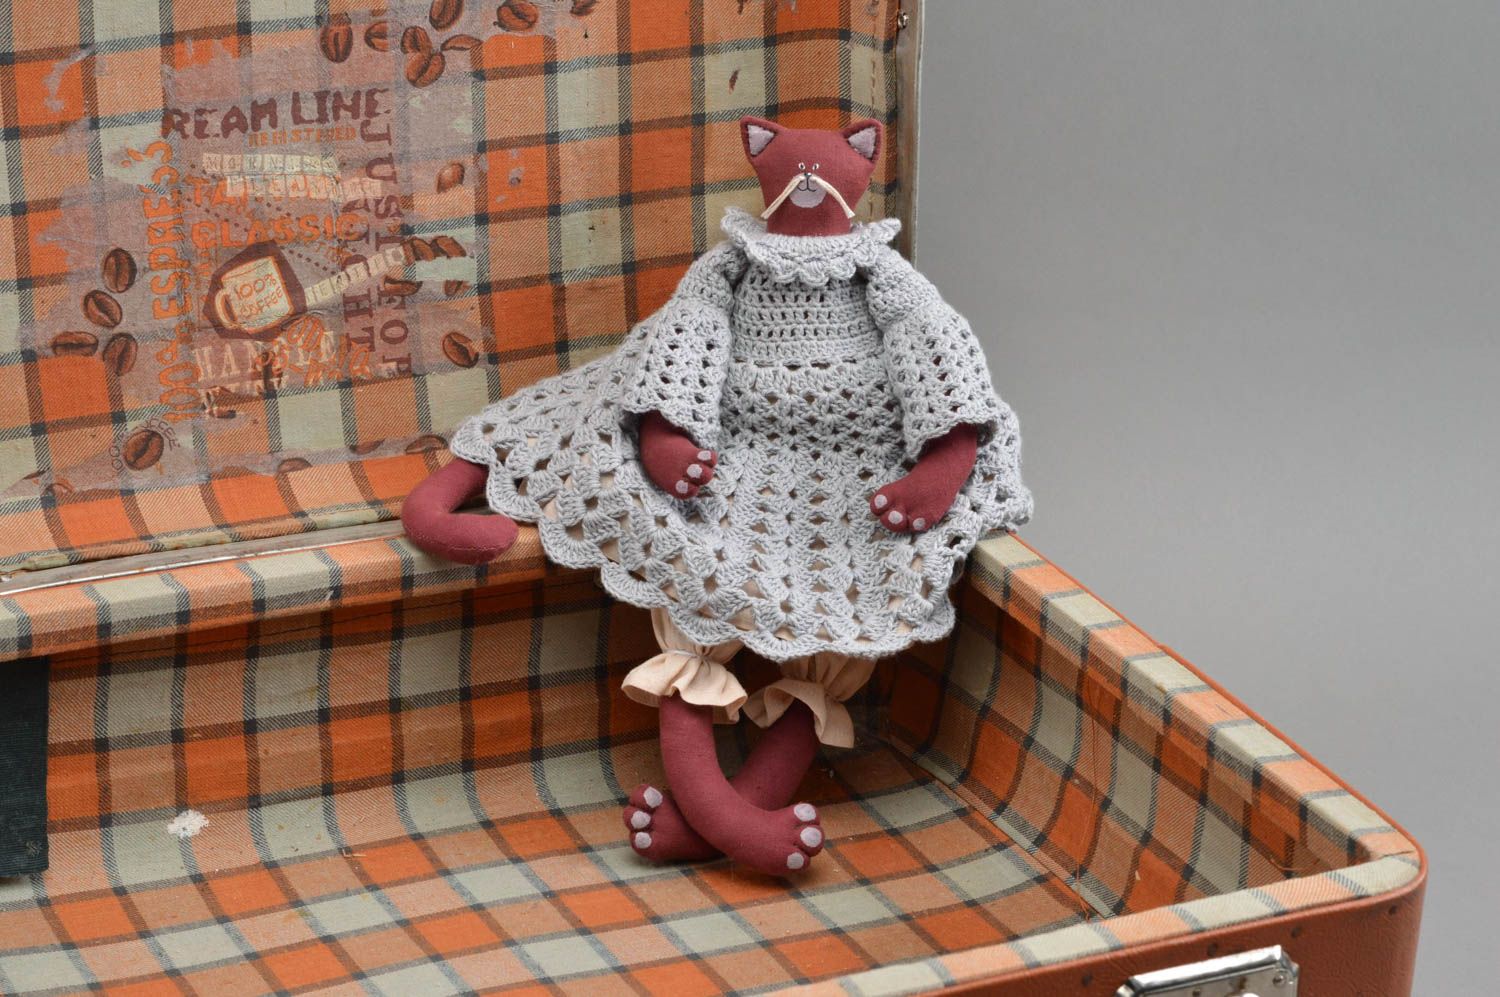 Handmade fabric cat toy in crocheted dress designer interior decor ideas photo 1